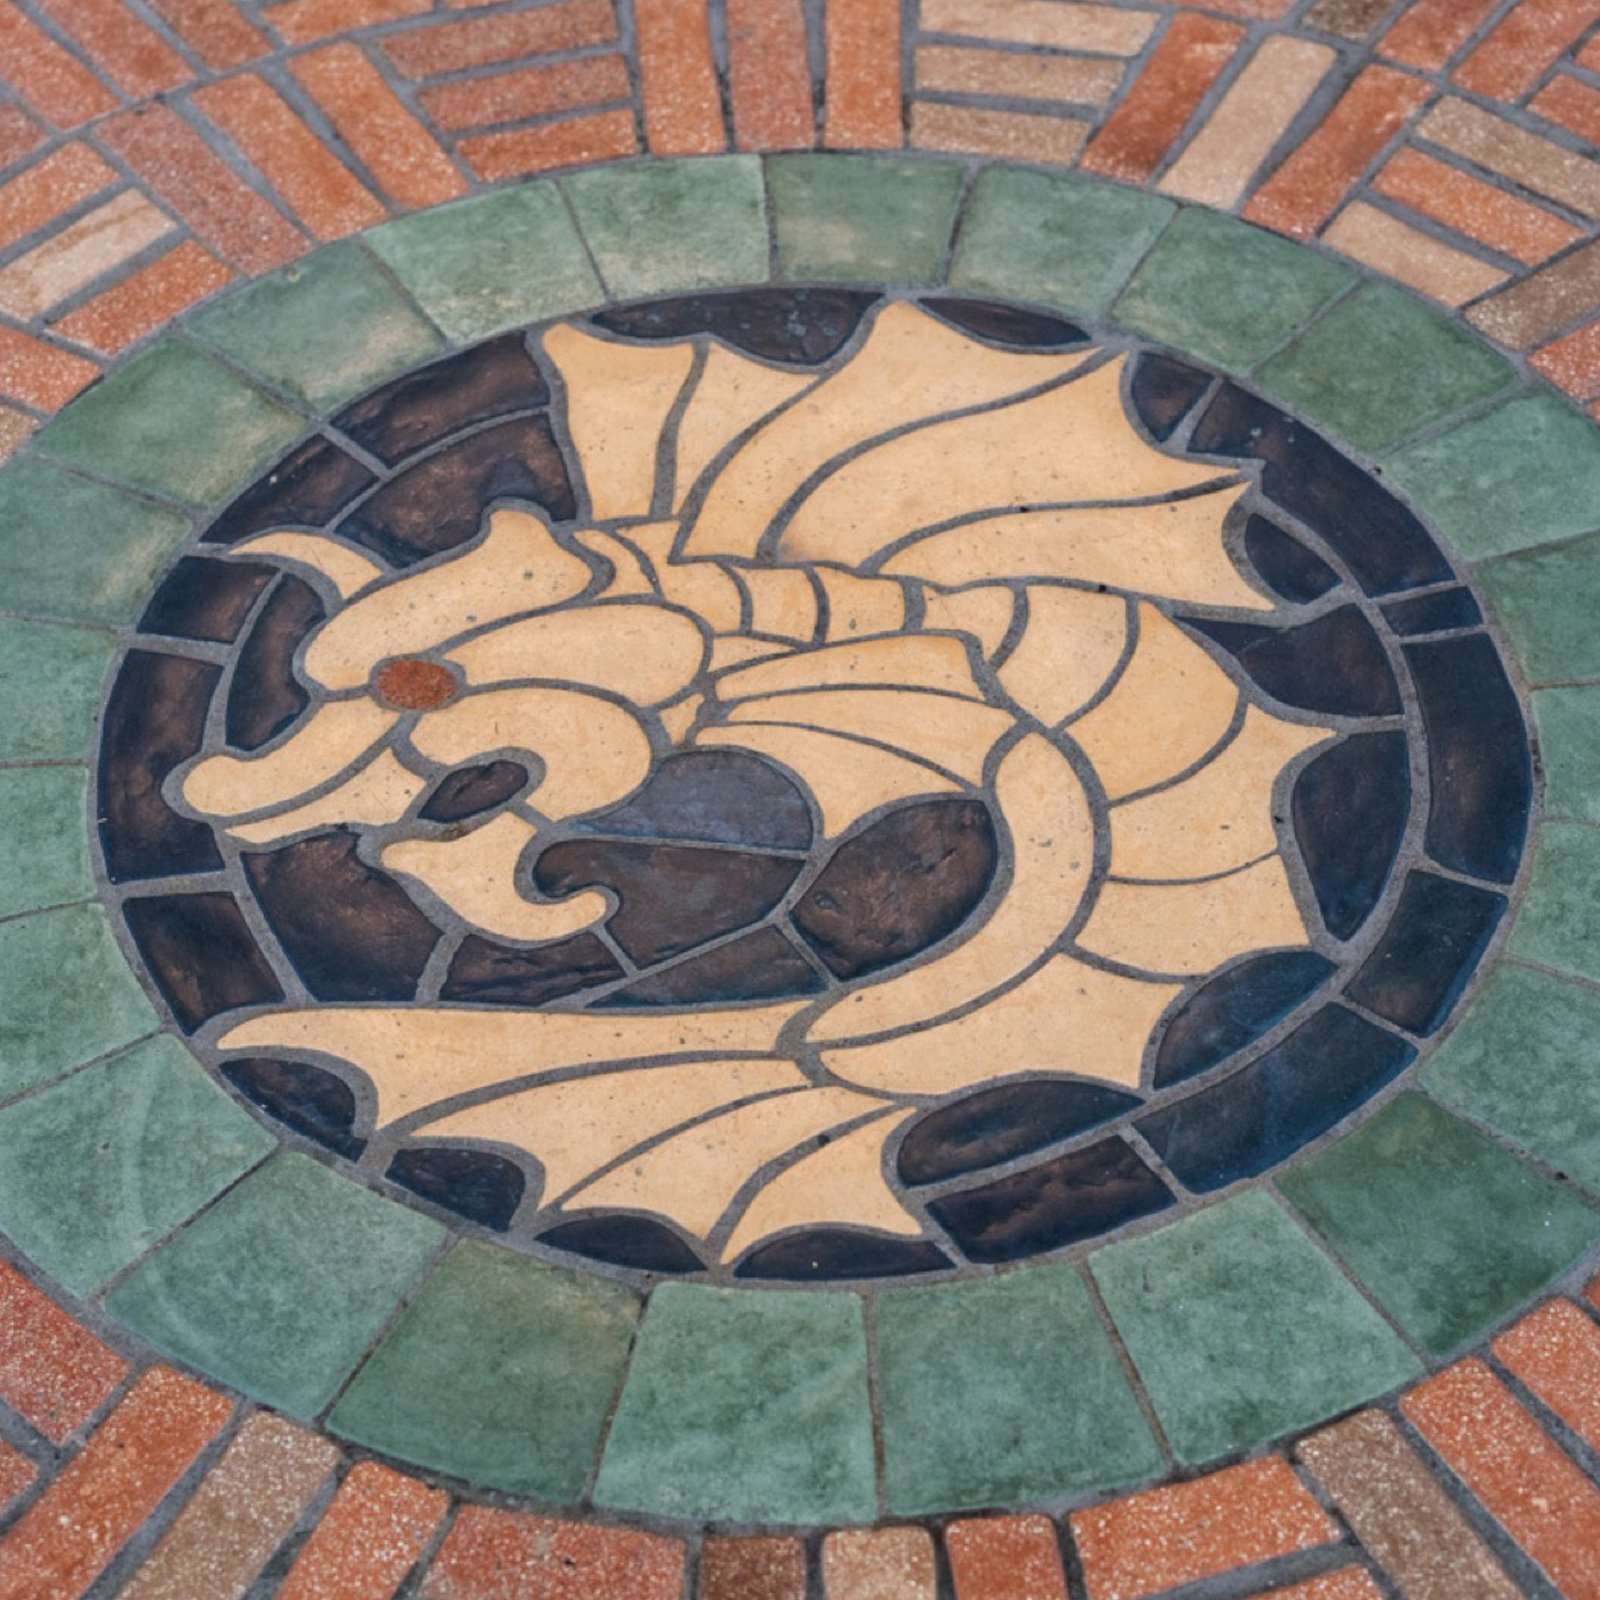 Pewabic Pottery Image of a Tile design